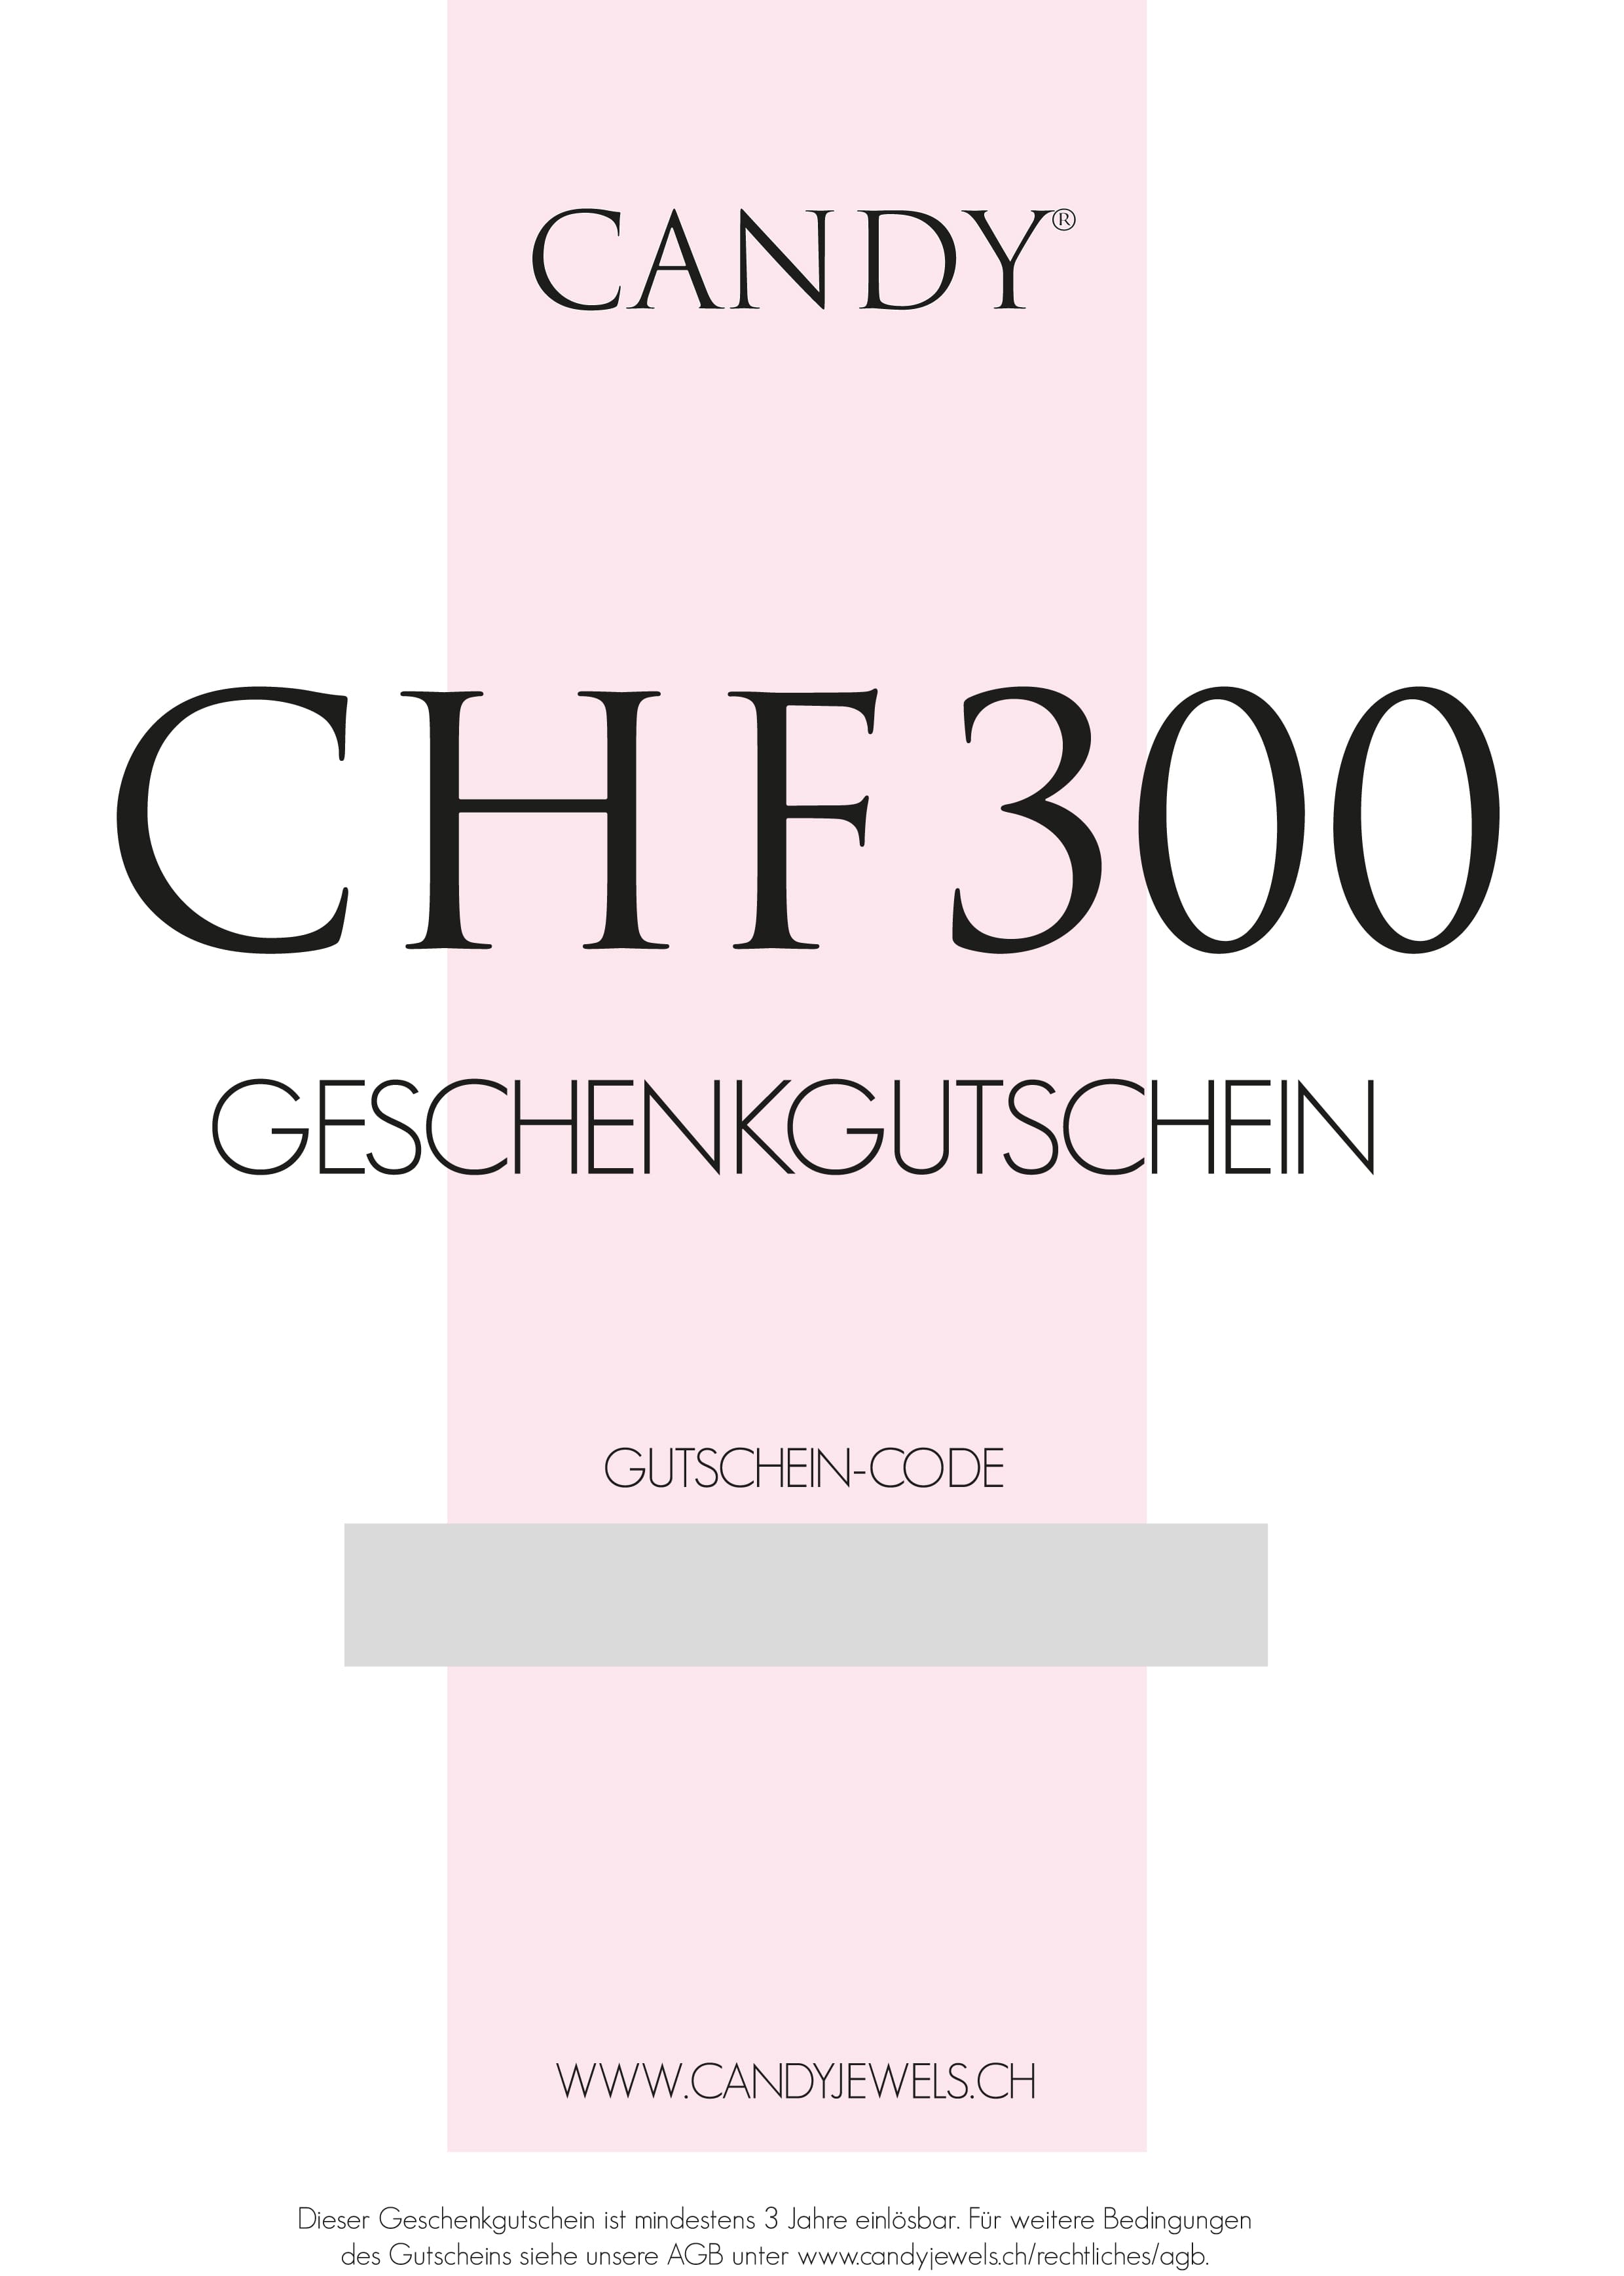 Printable voucher CHF 300